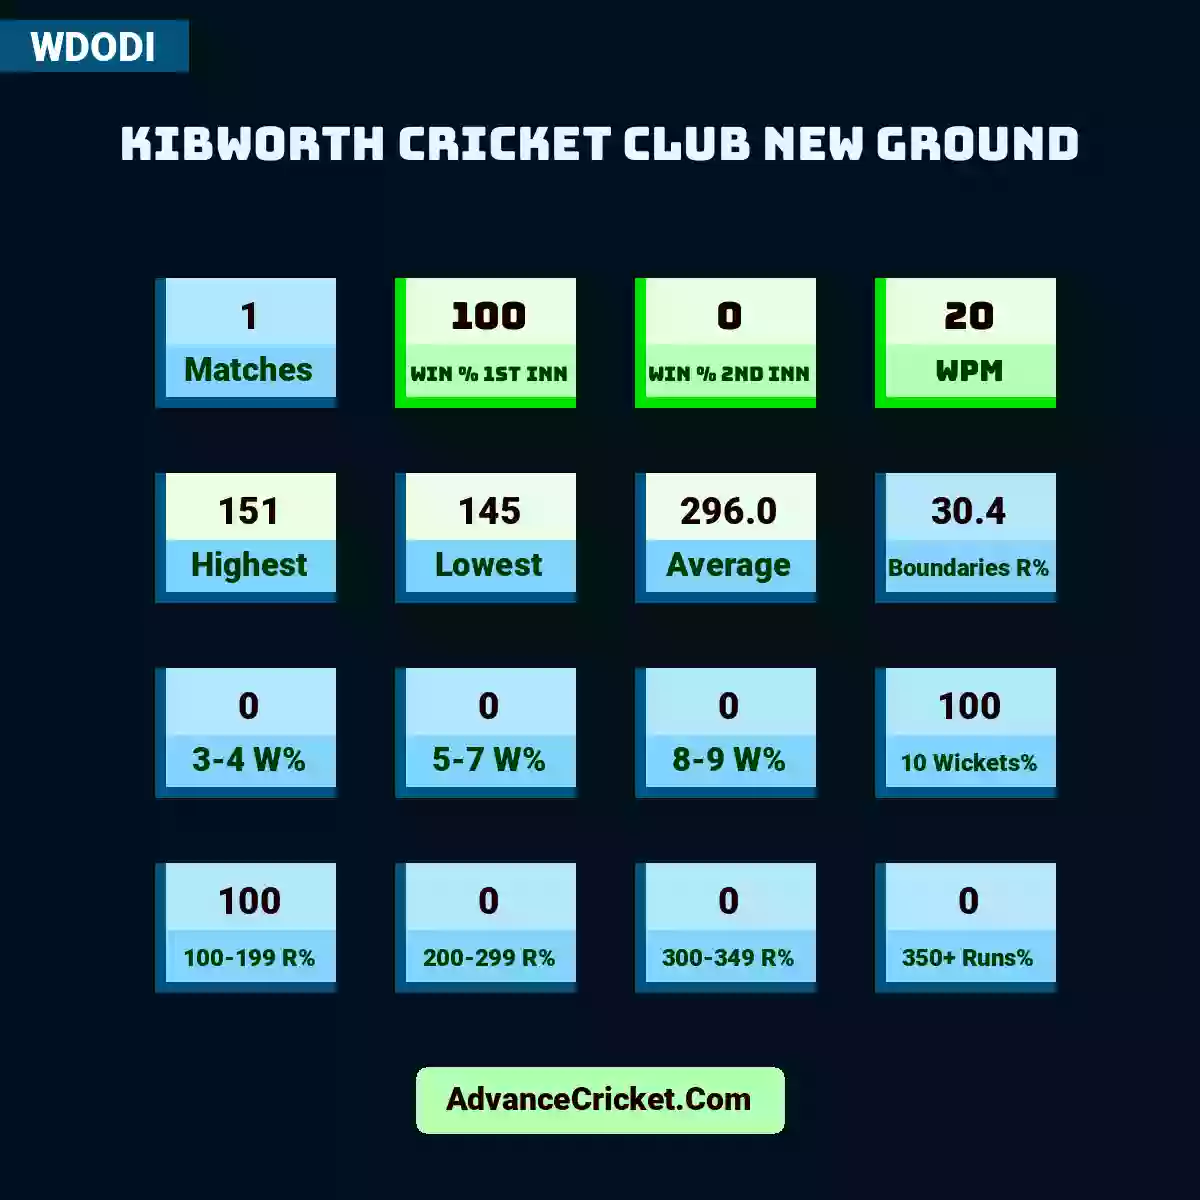 Image showing Kibworth Cricket Club New Ground with Matches: 1, Win % 1st Inn: 100, Win % 2nd Inn: 0, WPM: 20, Highest: 151, Lowest: 145, Average: 296.0, Boundaries R%: 30.4, 3-4 W%: 0, 5-7 W%: 0, 8-9 W%: 0, 10 Wickets%: 100, 100-199 R%: 100, 200-299 R%: 0, 300-349 R%: 0, 350+ Runs%: 0.